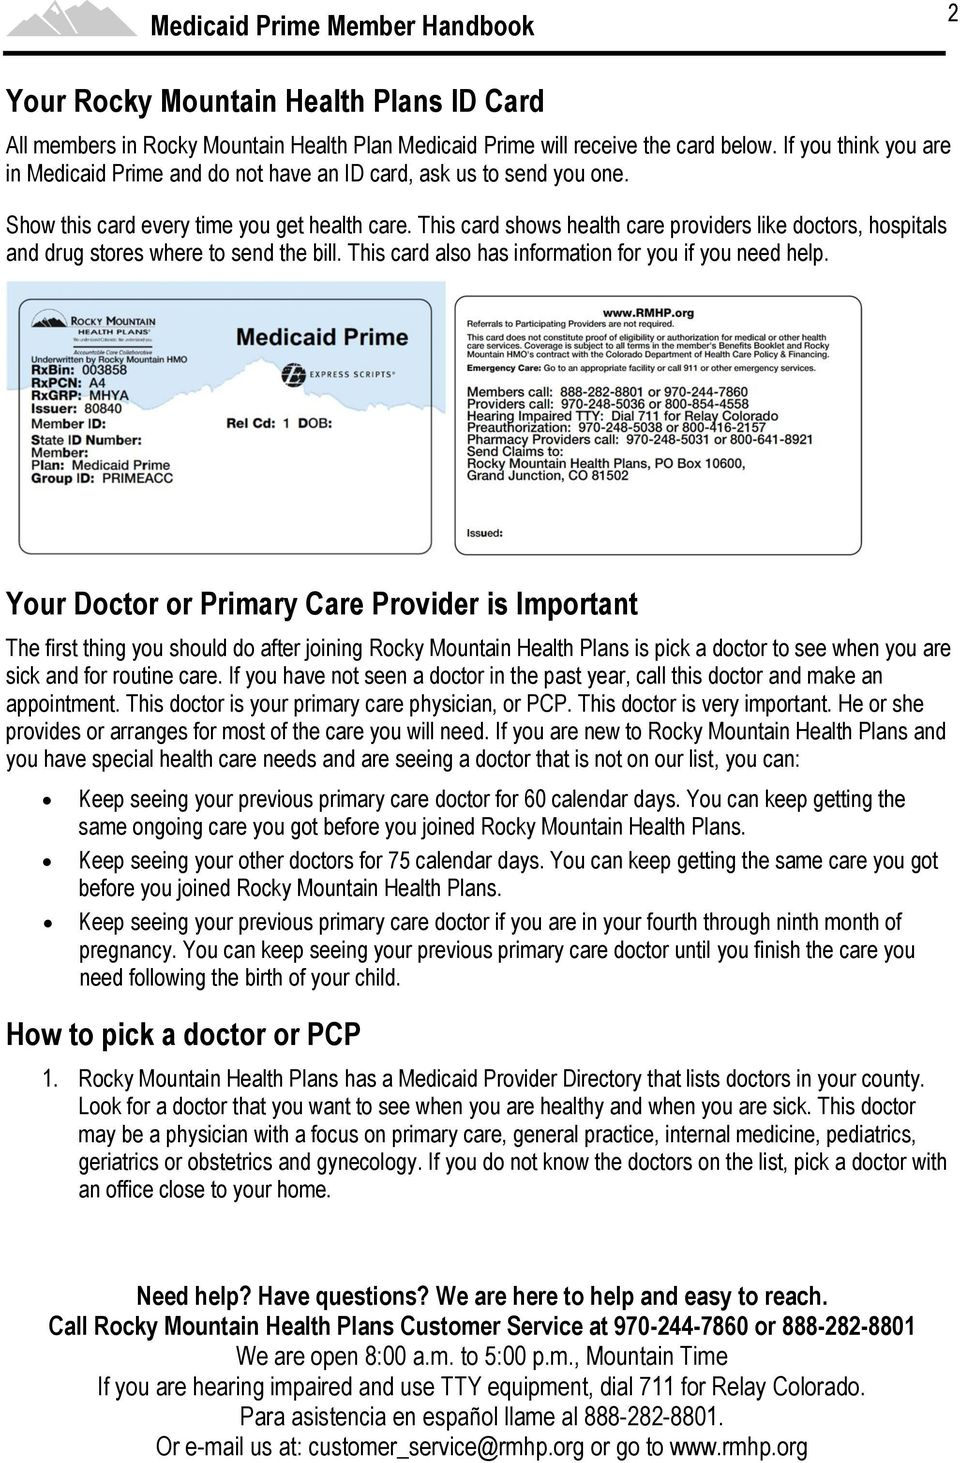 Rocky Mountain Health Plans Medicaid Prime Member Handbook Pdf